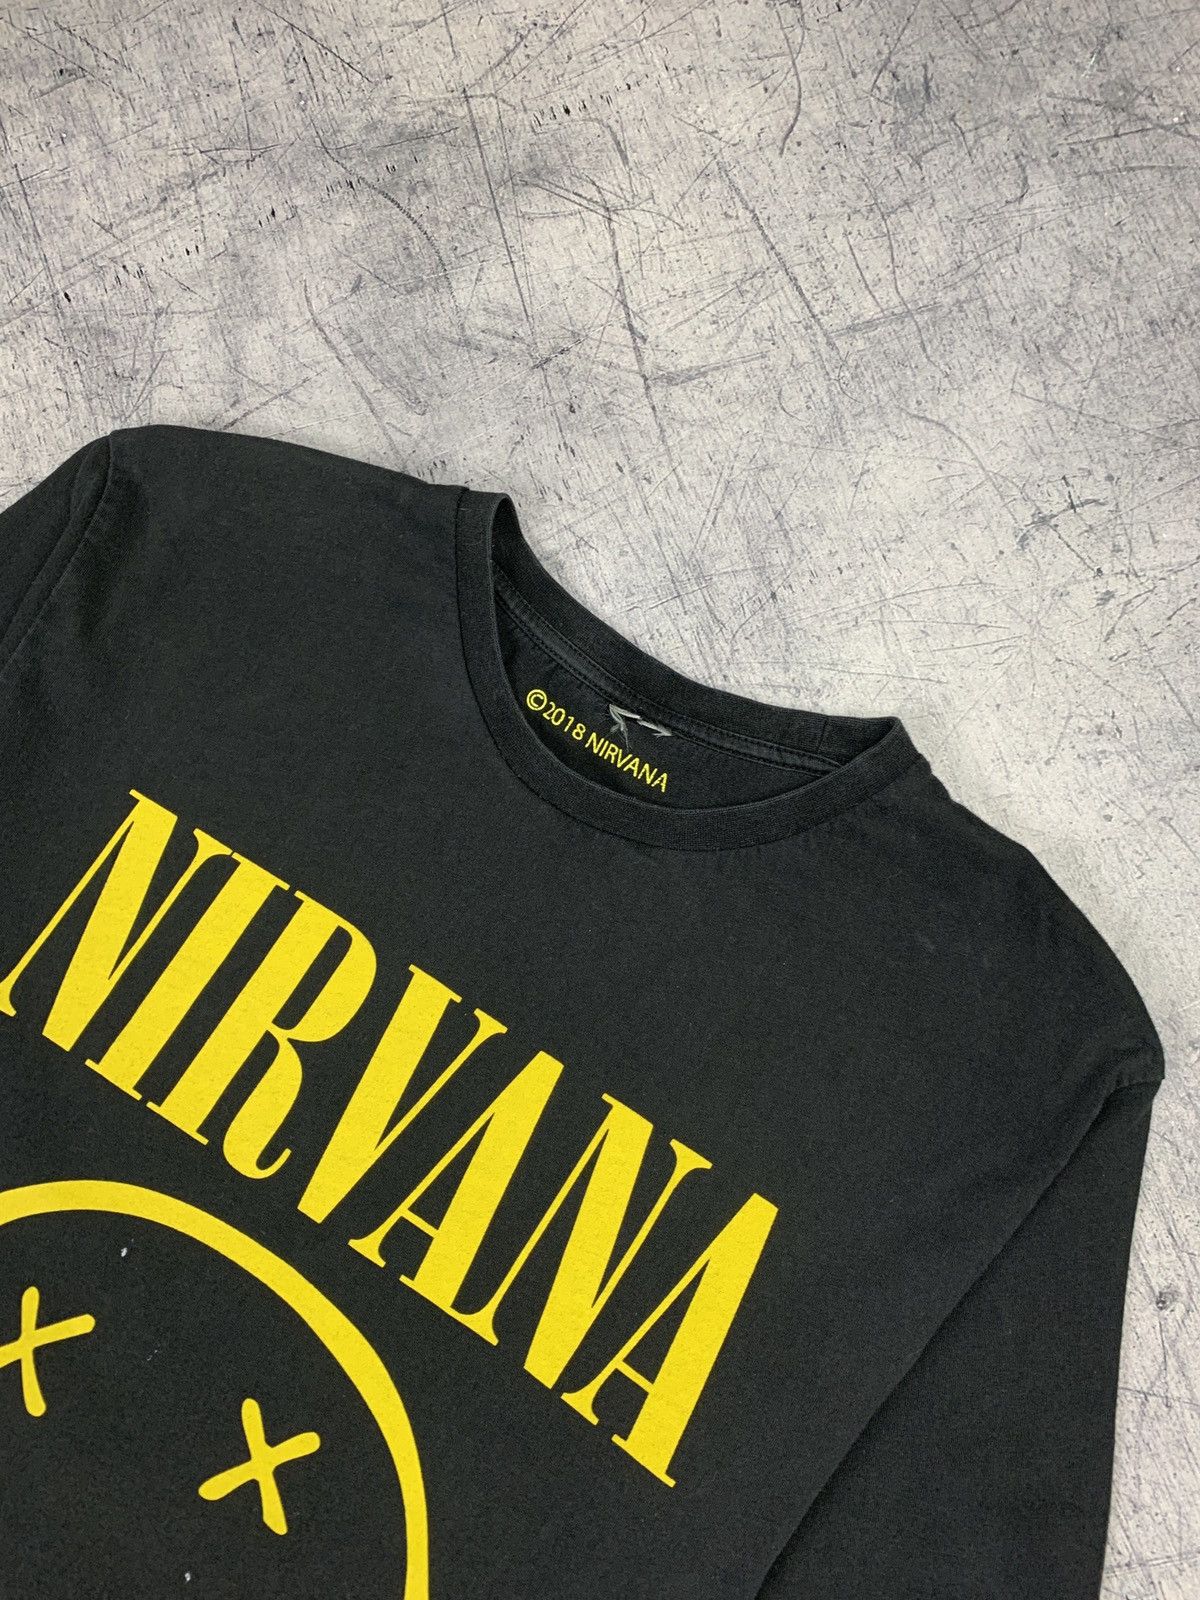 Nirvana Vintage Nirvana Smile Rock Band Tour Graphic Tee Size US M / EU 48-50 / 2 - 2 Preview